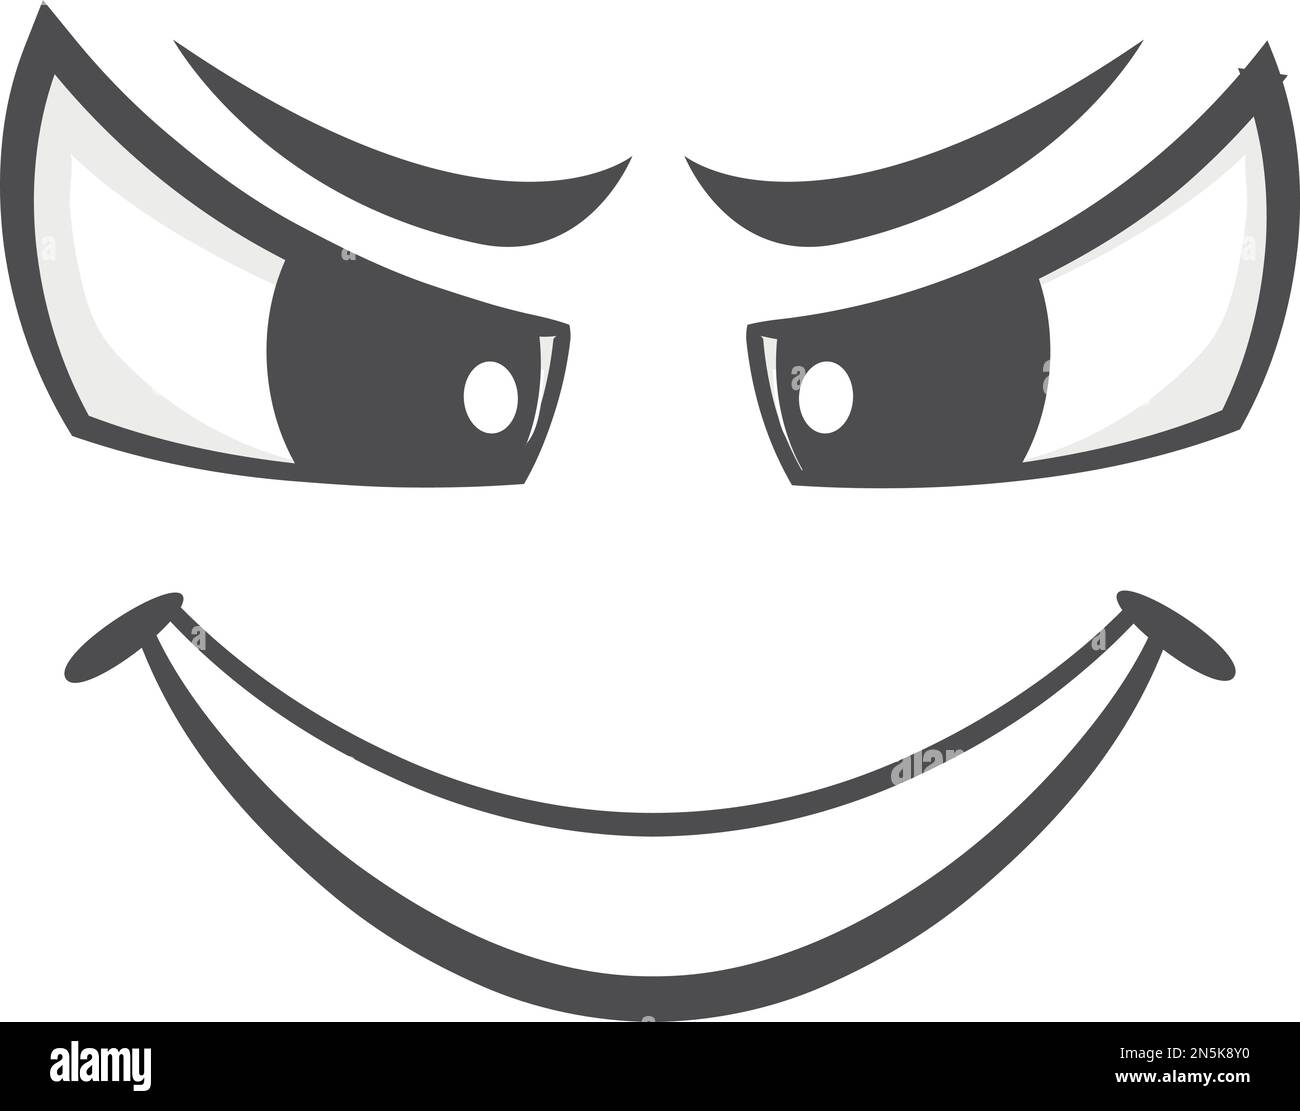 Evil grin emoji. Devil face comic expression Stock Vector